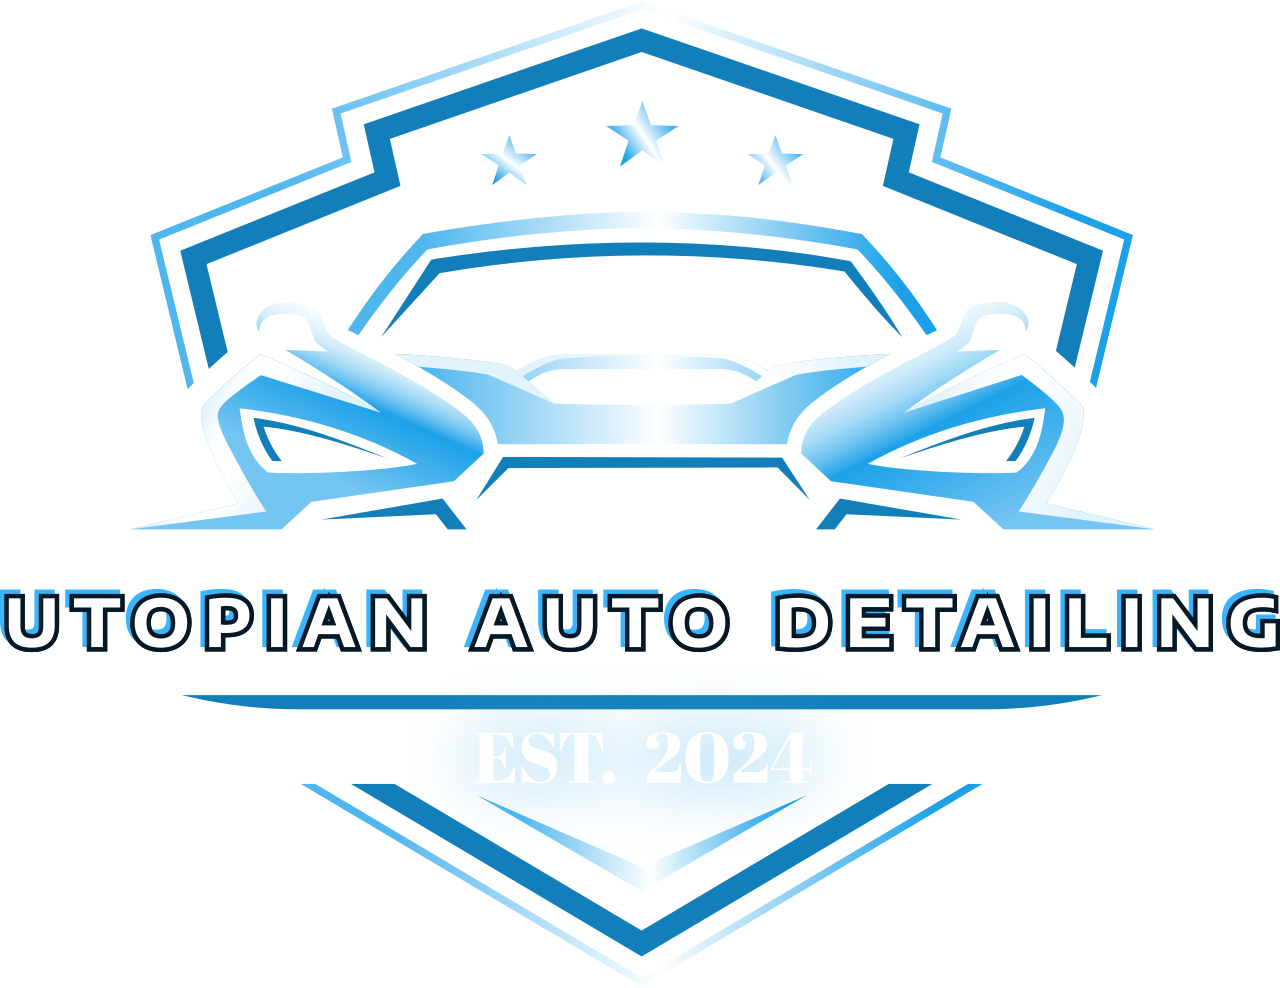 Utopian Auto Detailing's logo